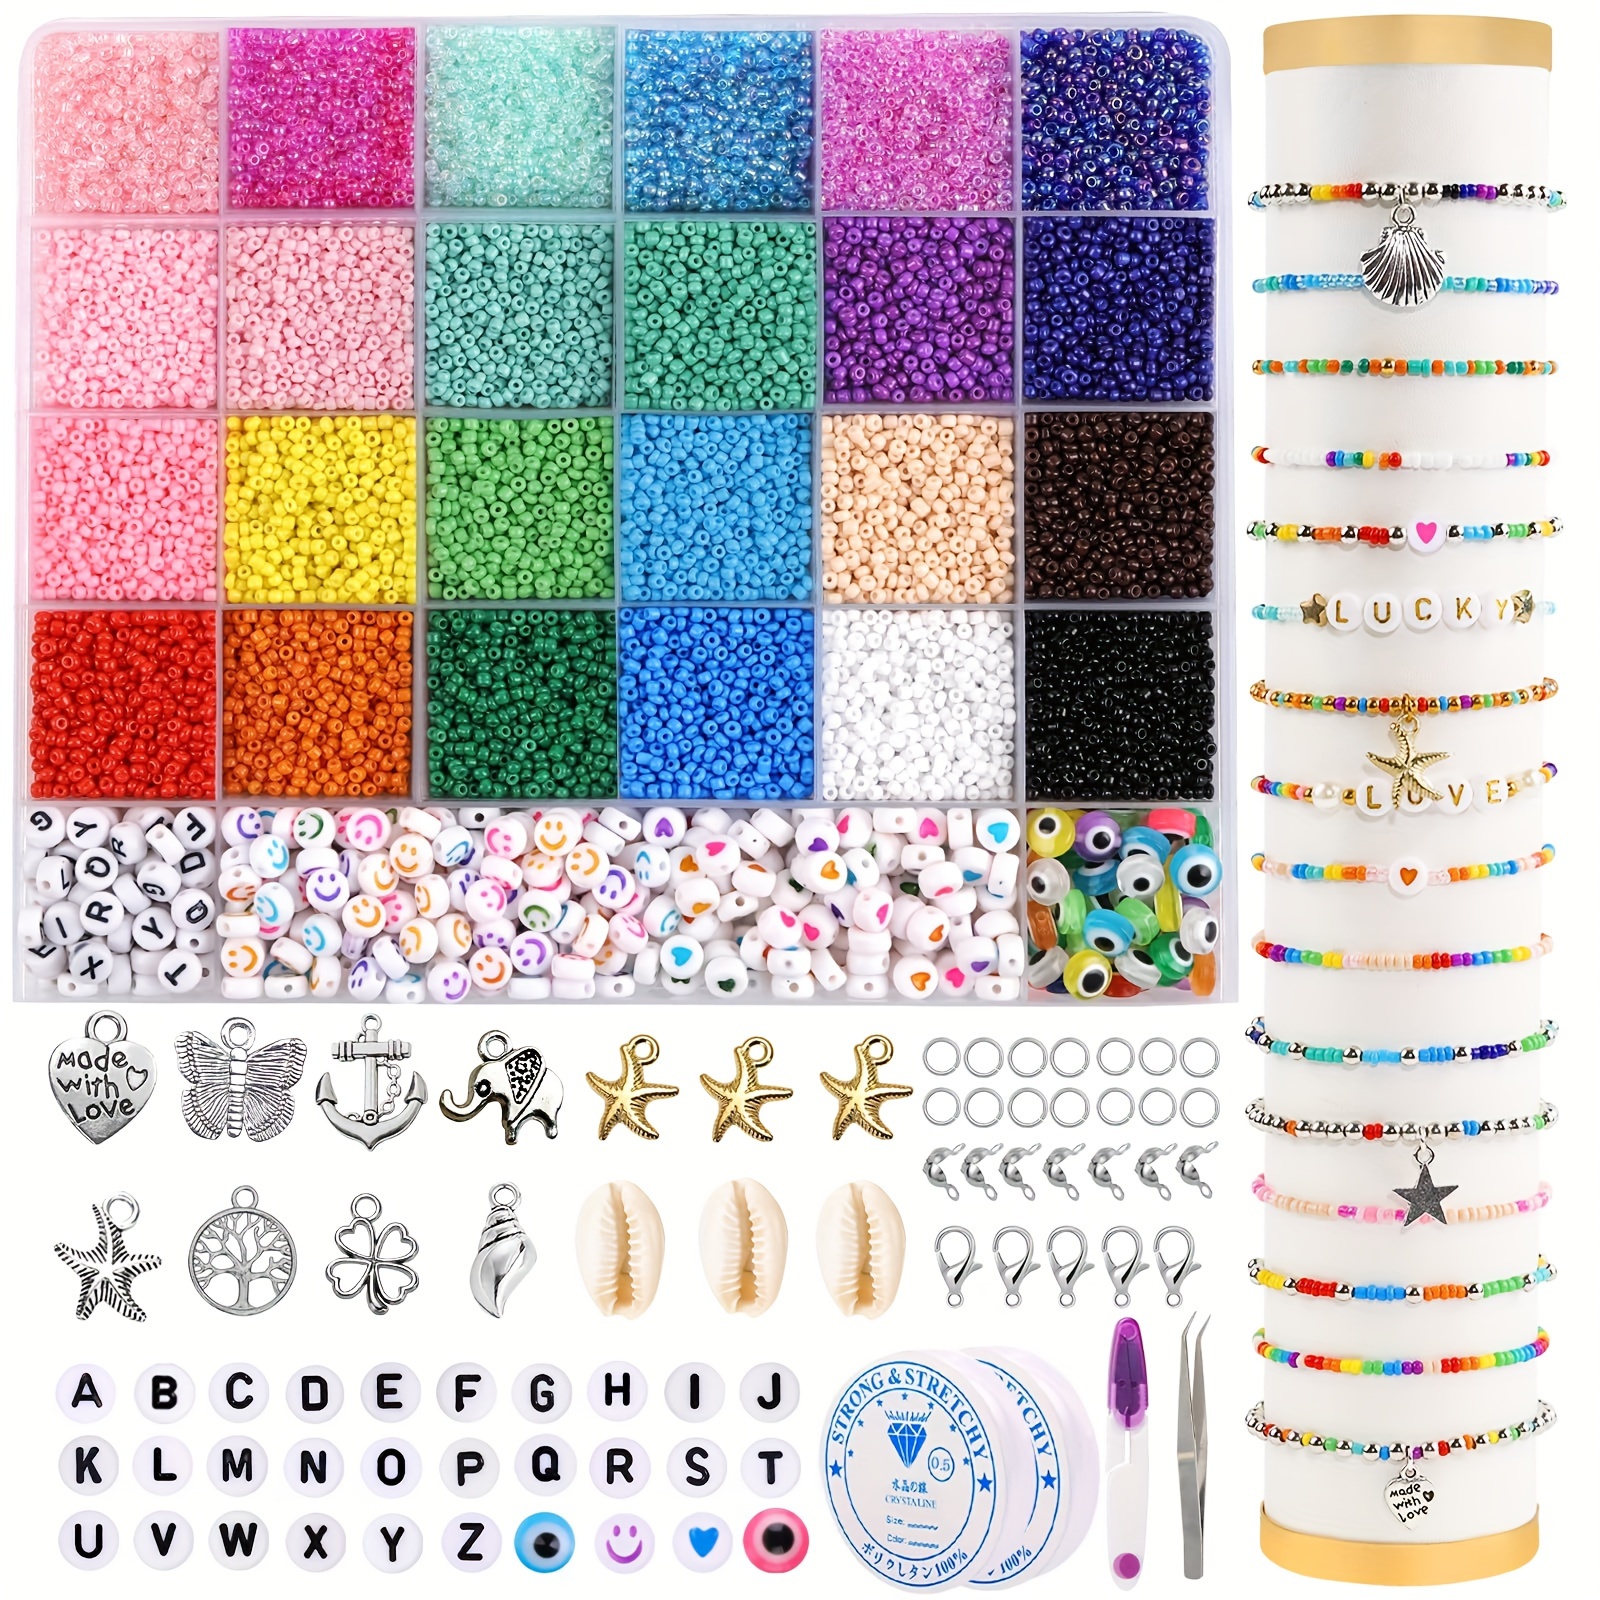 Friendship Bracelet Making Kit Toys, 20 Pre-Cut Threads - Makes Up